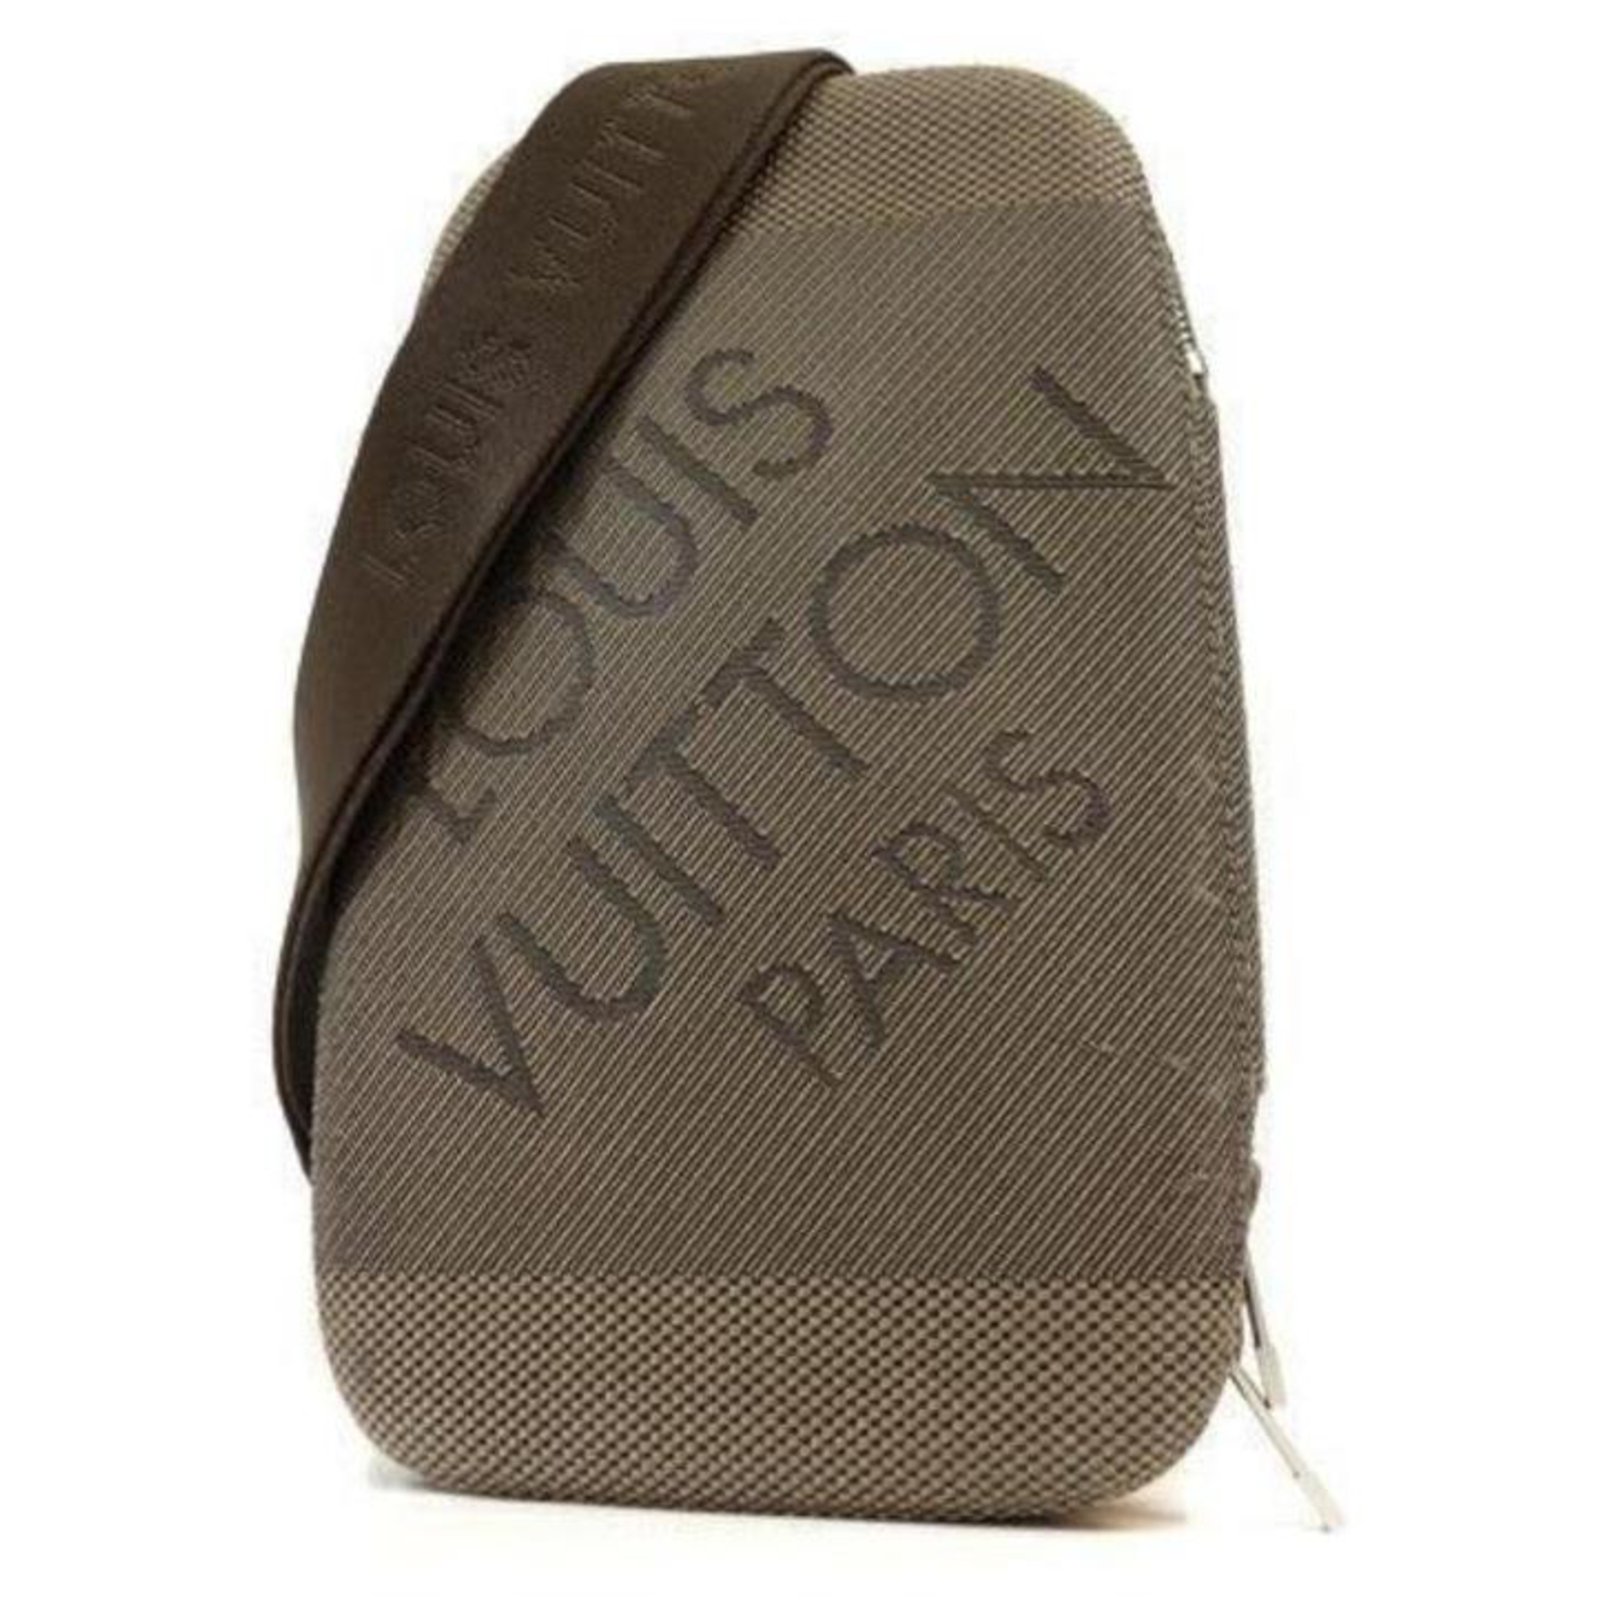 Louis Vuitton Bumbag bag organiser